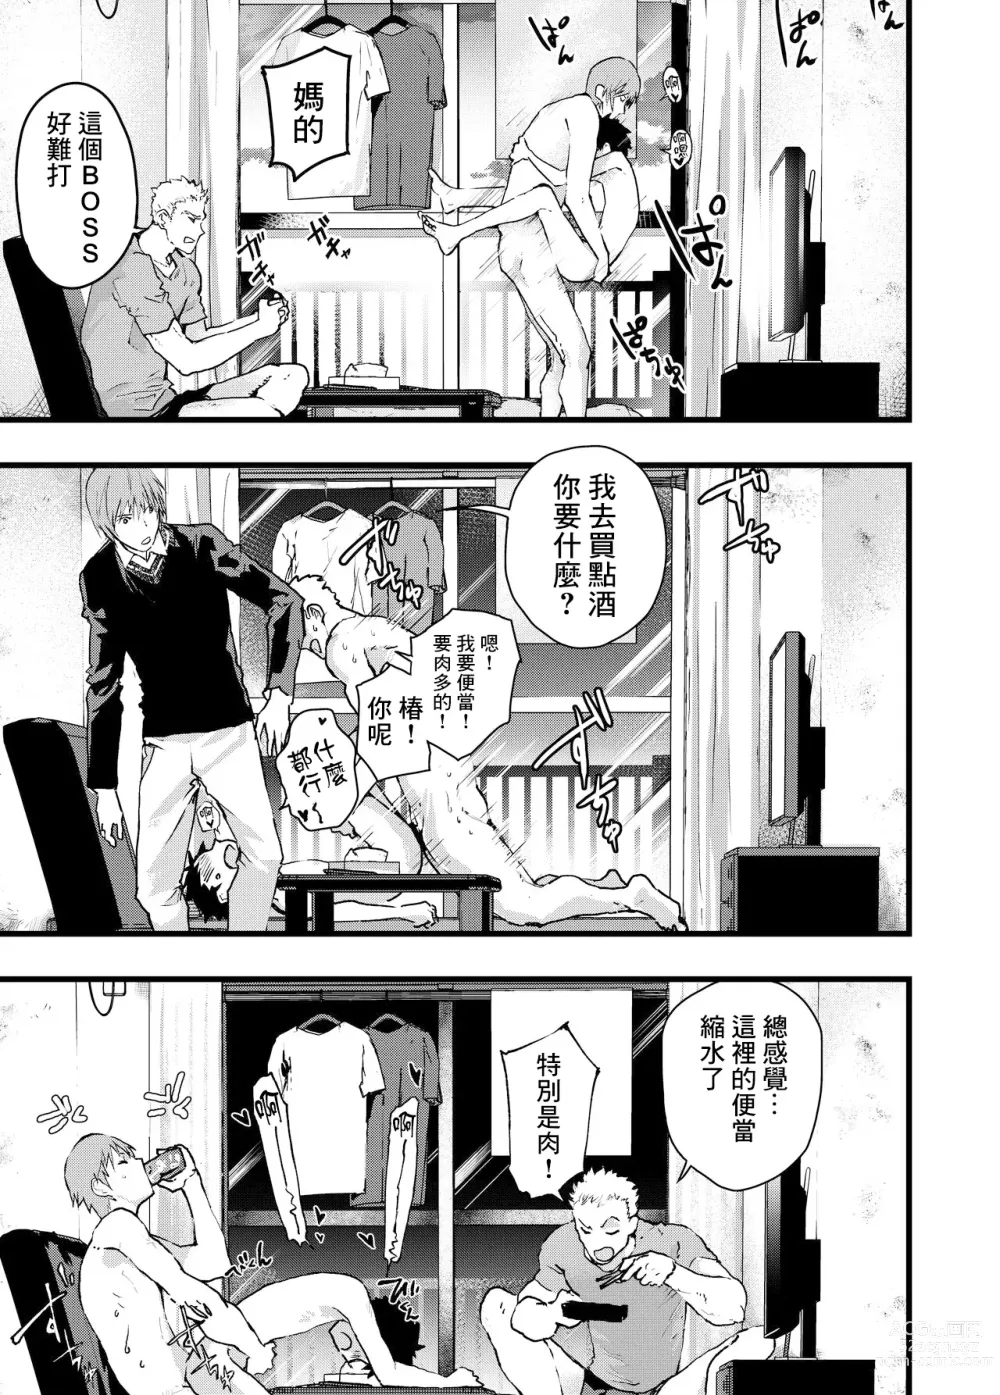 Page 39 of doujinshi 被癡漢強姦後墮入快樂深淵的少年